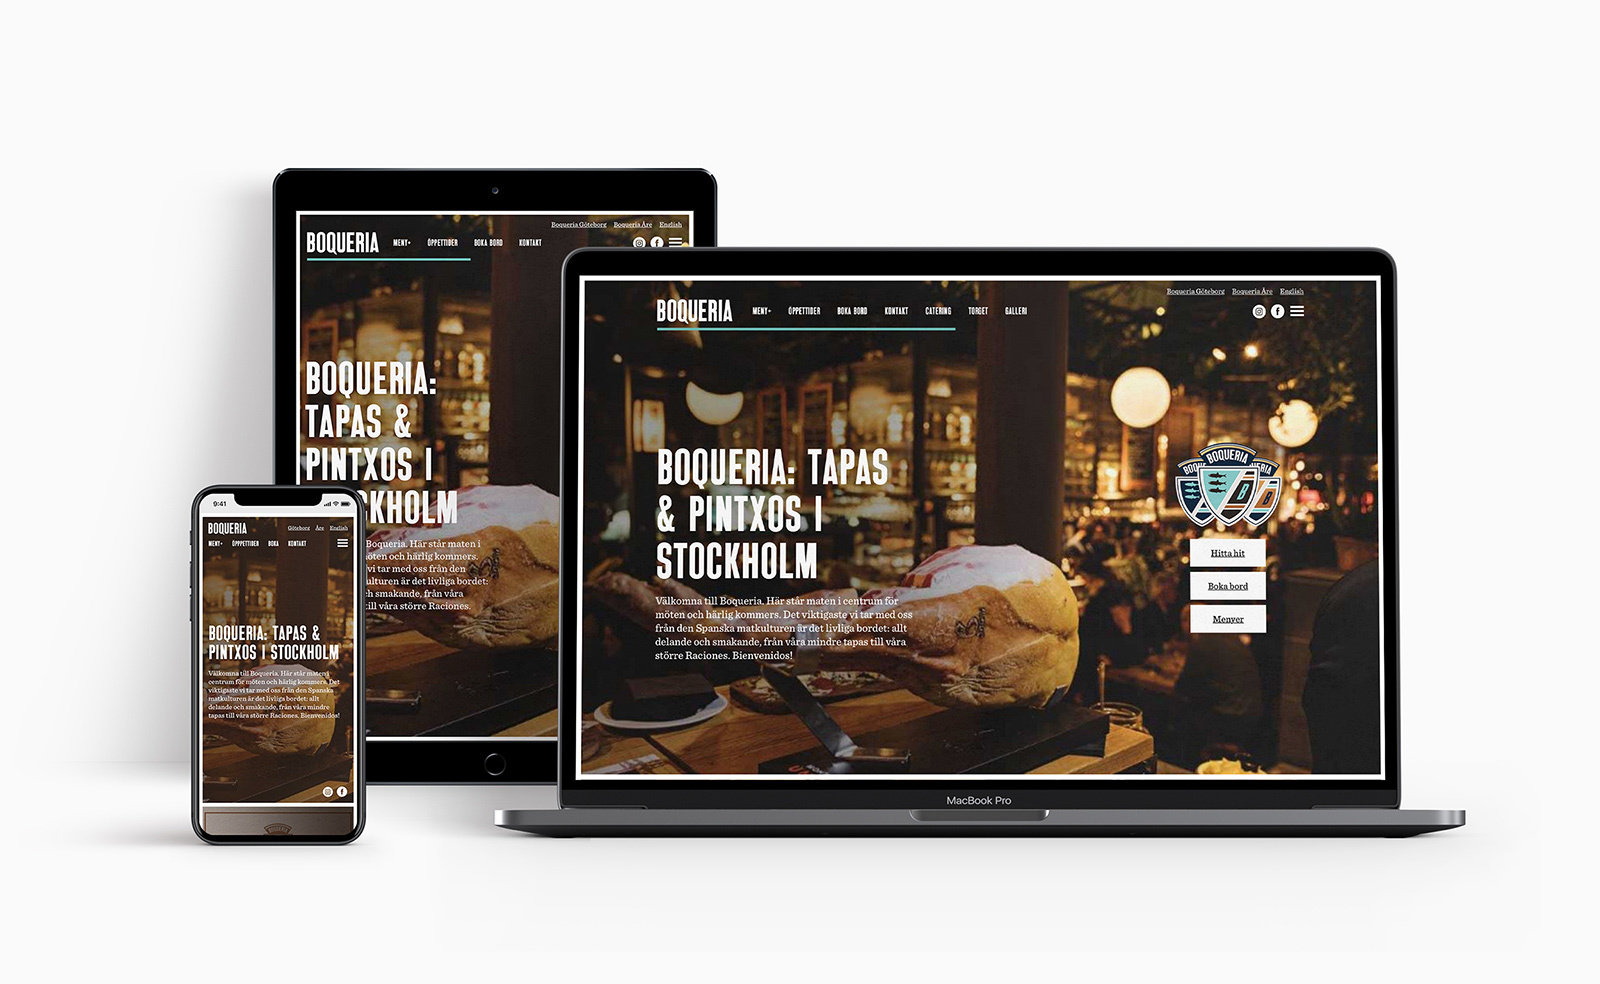 Boqueria Stockholm webbplats i Mac, iPad och iPhone